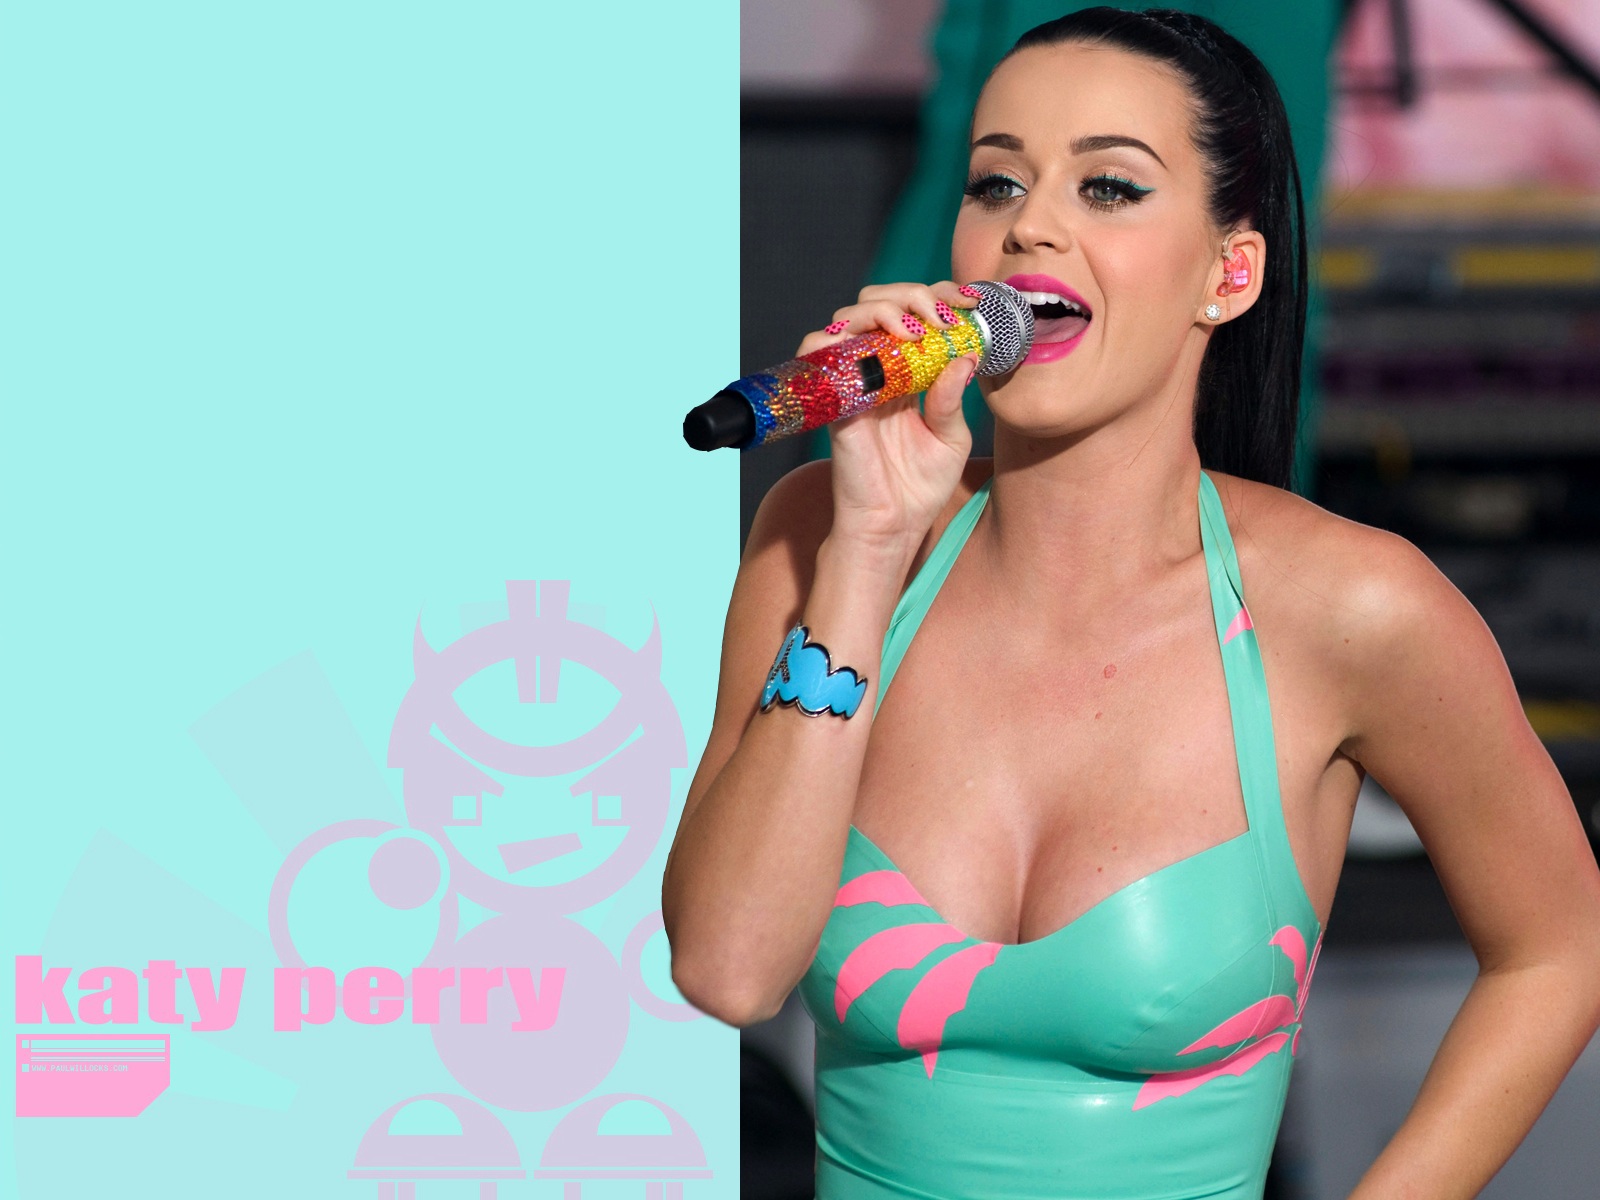 katy-perry-big-boobs-sexy-boobs-girl-next-door-hotest-girl-hotest-woman- wallpaper-katy-perry-wet-tits-desktop-katy-perry-wallpaper-katy-perry- wallpapers | Happy Birthday Katy Perry